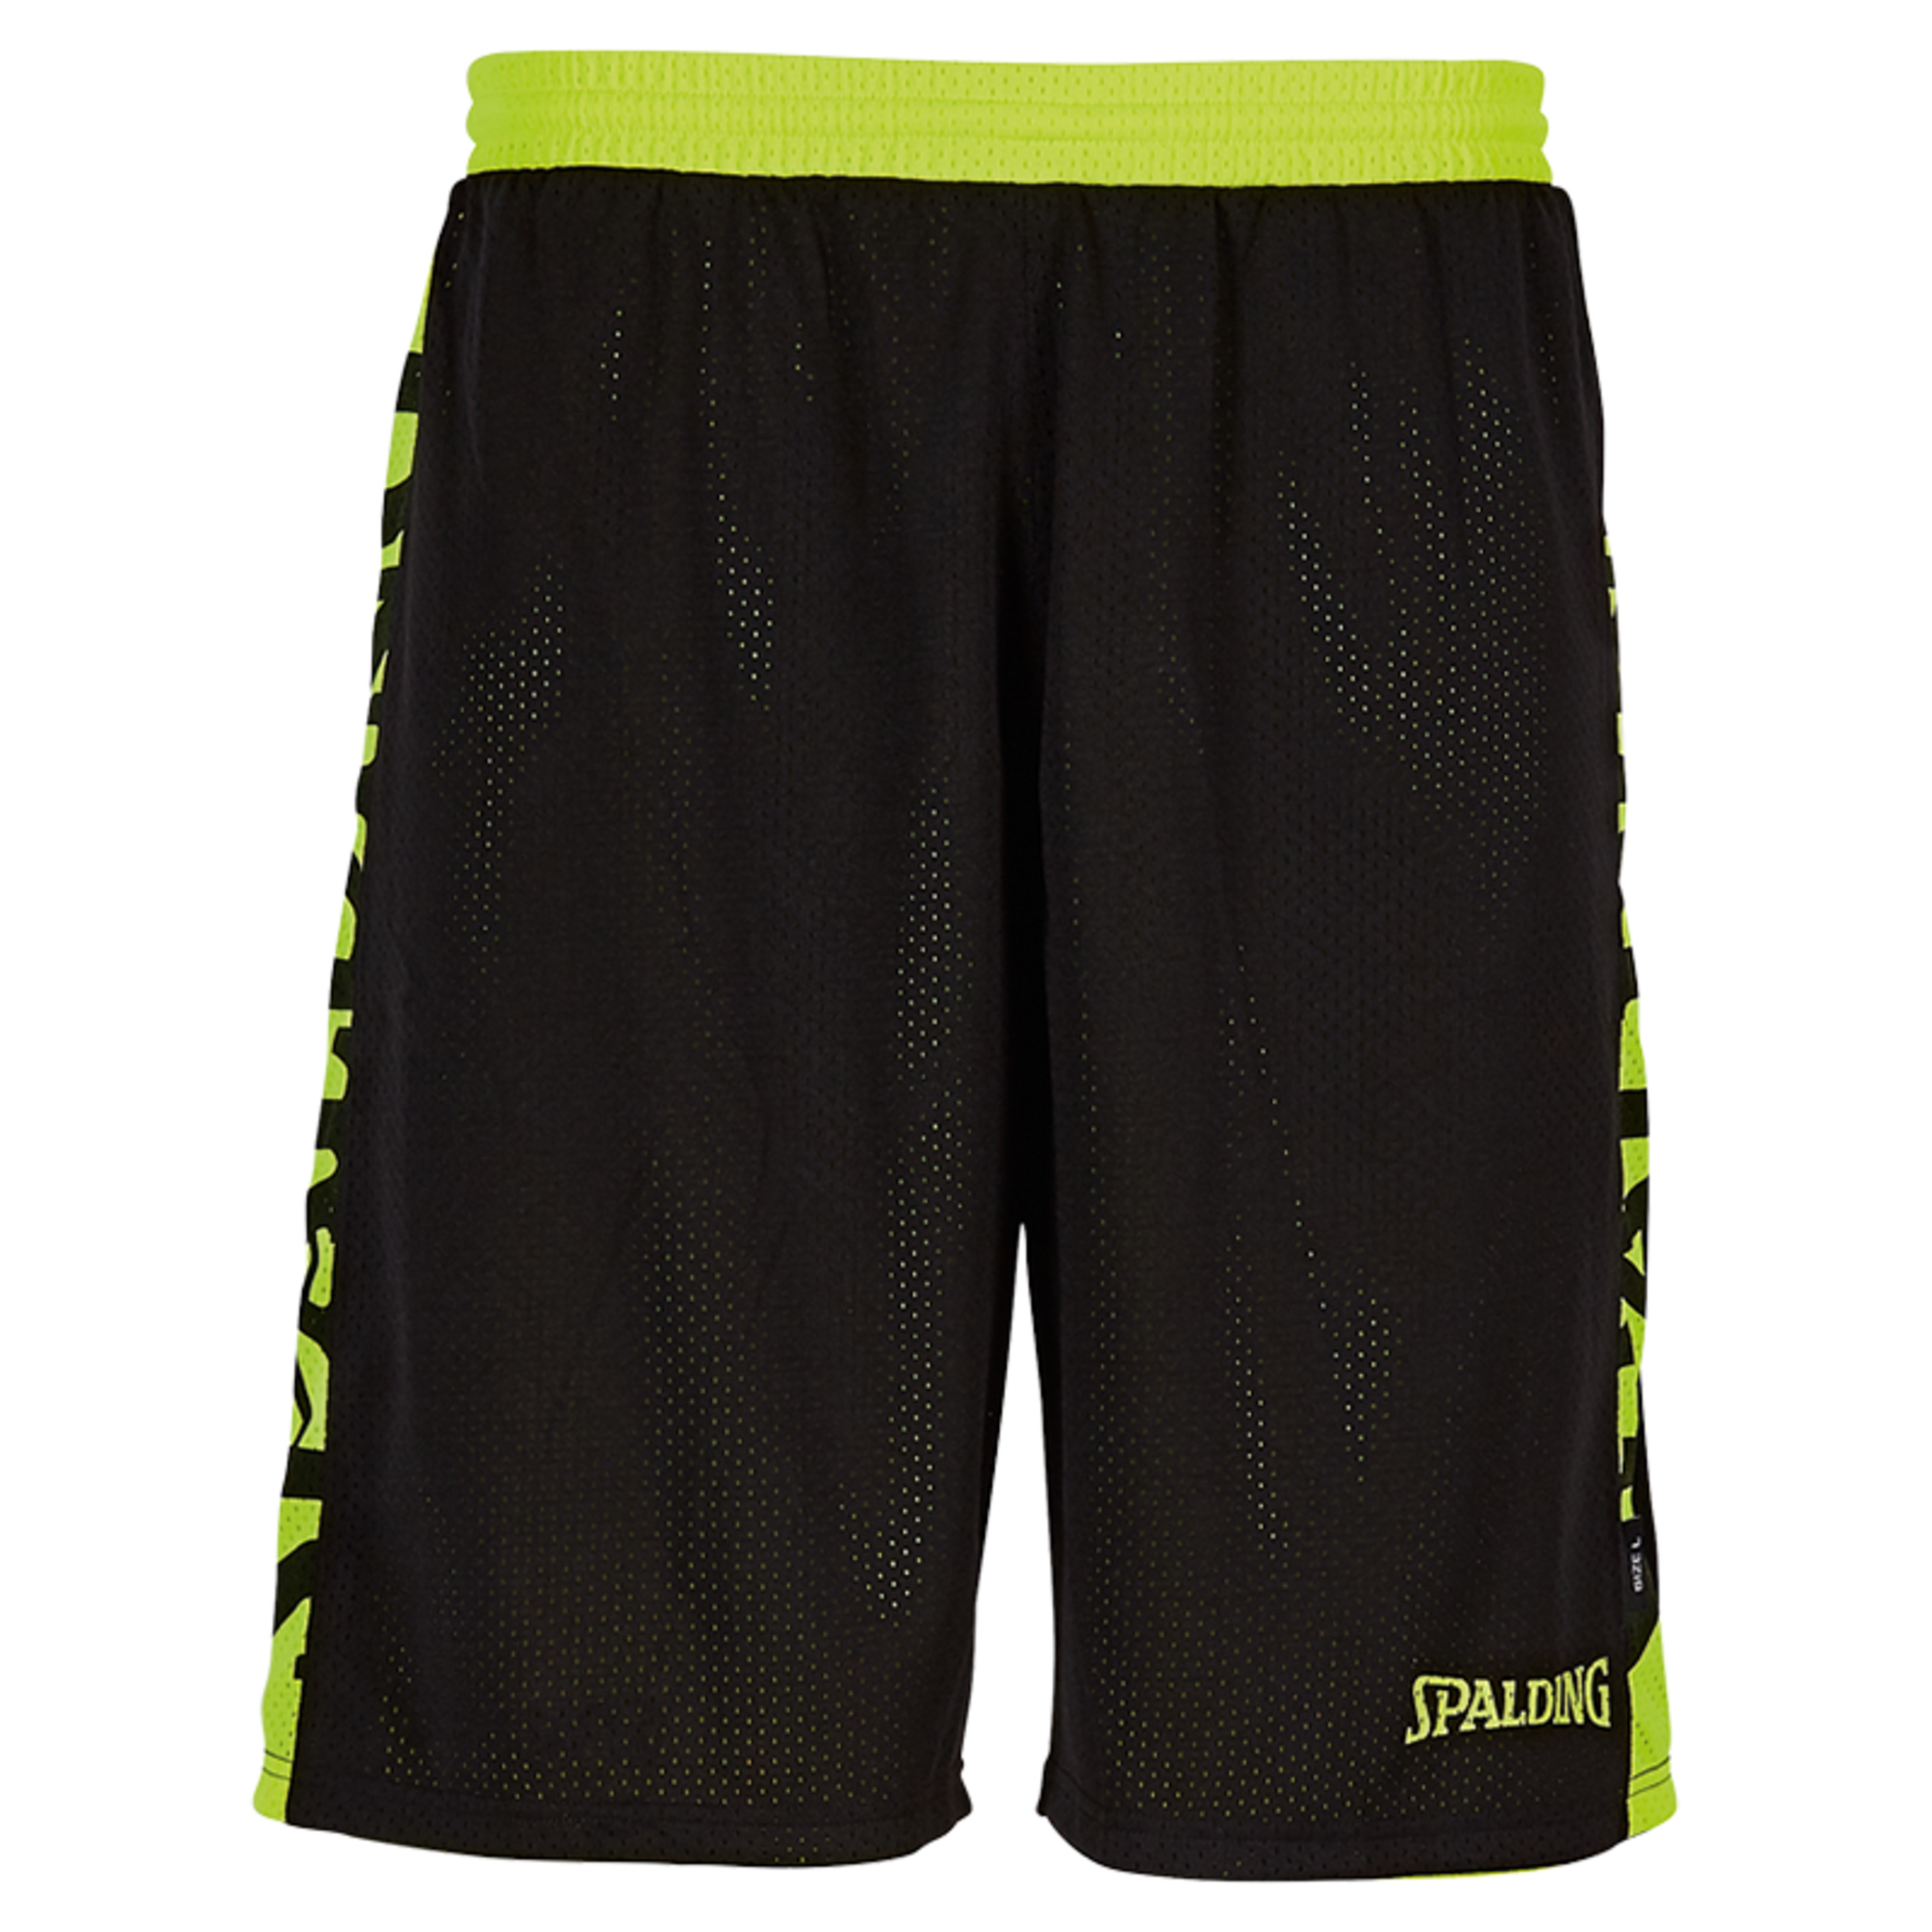 Essential Reversible Shorts Spalding